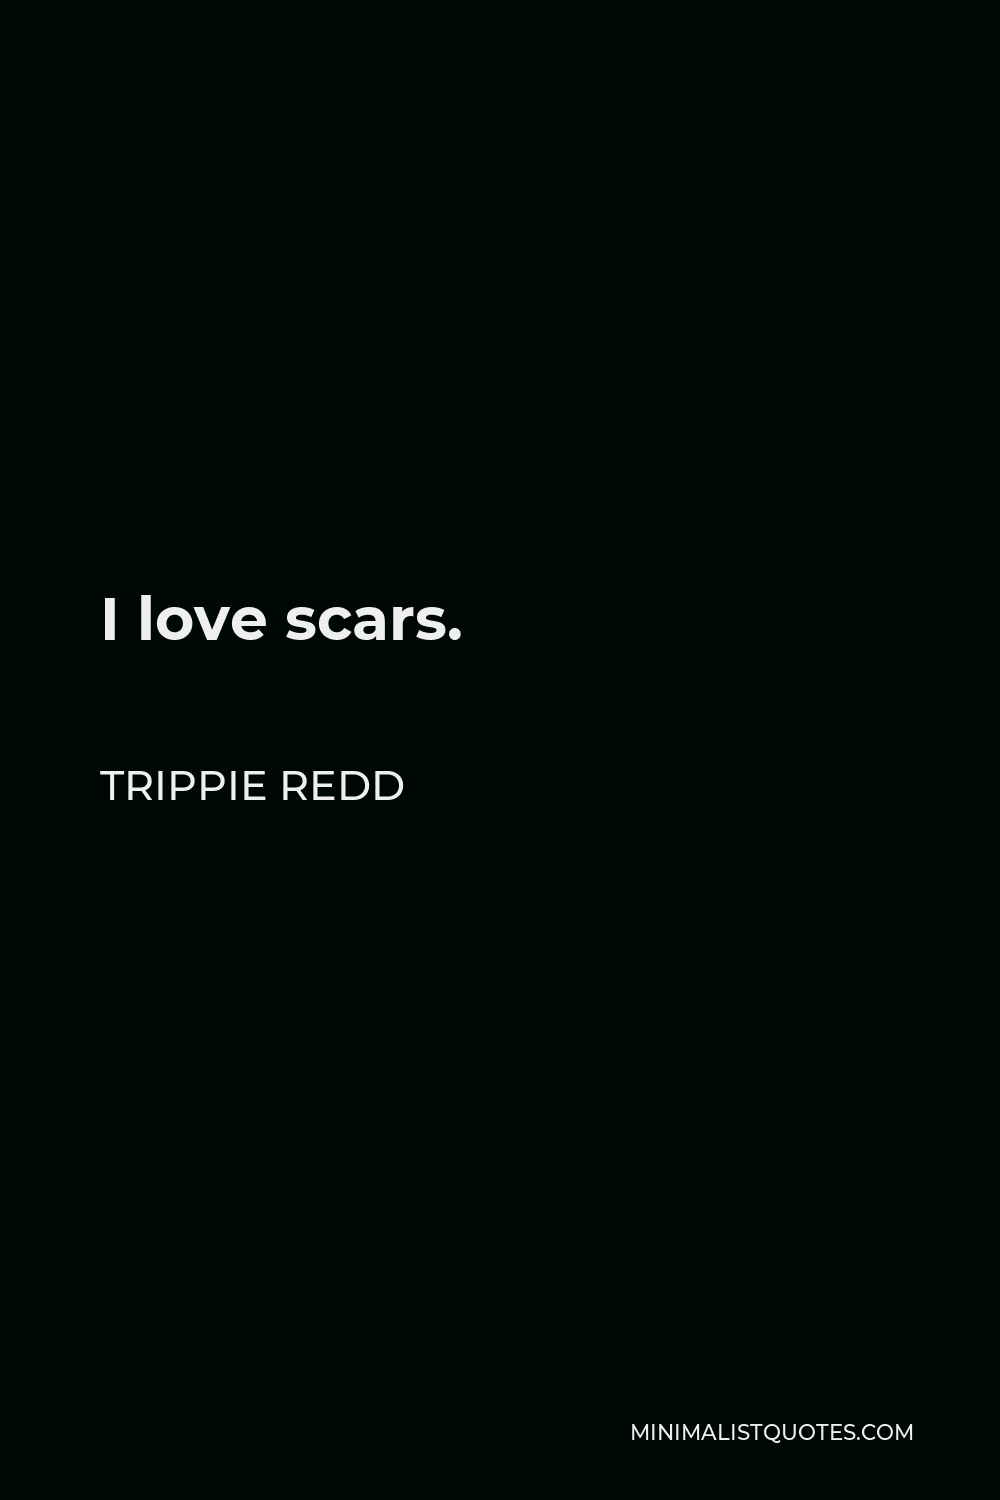 Trippie Redd Quote - I love scars.